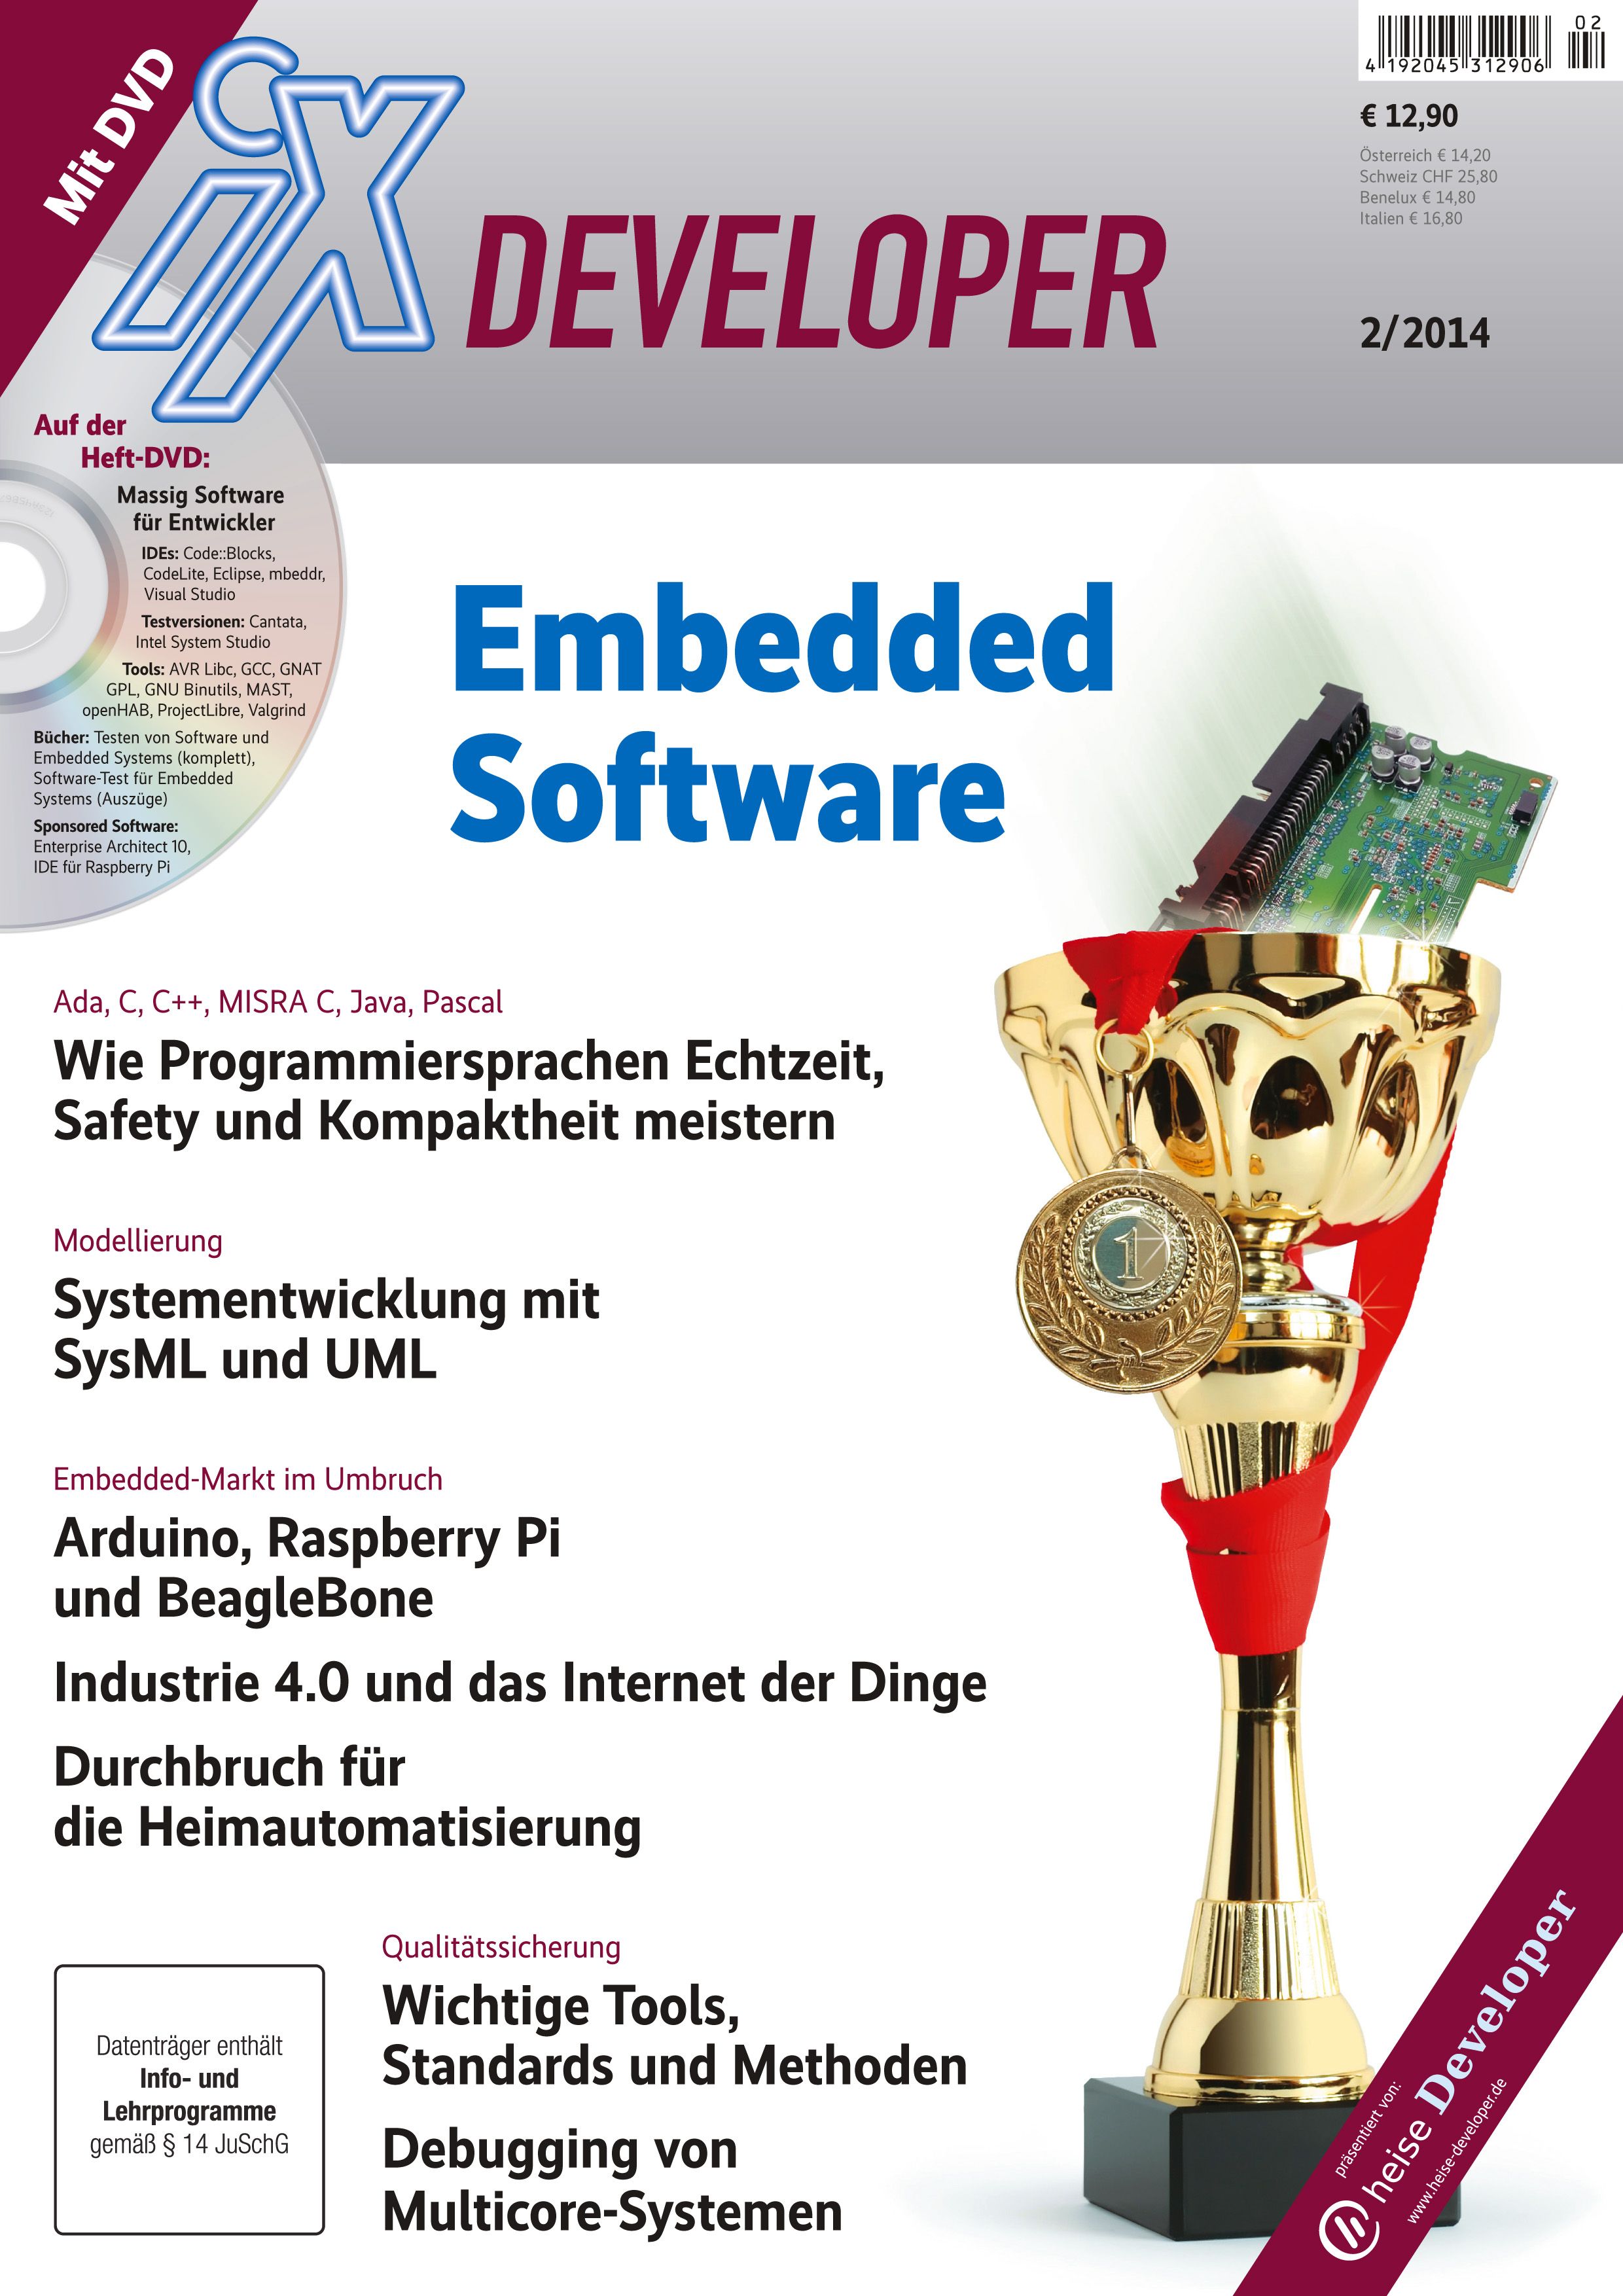 iX Developer Embedded Software